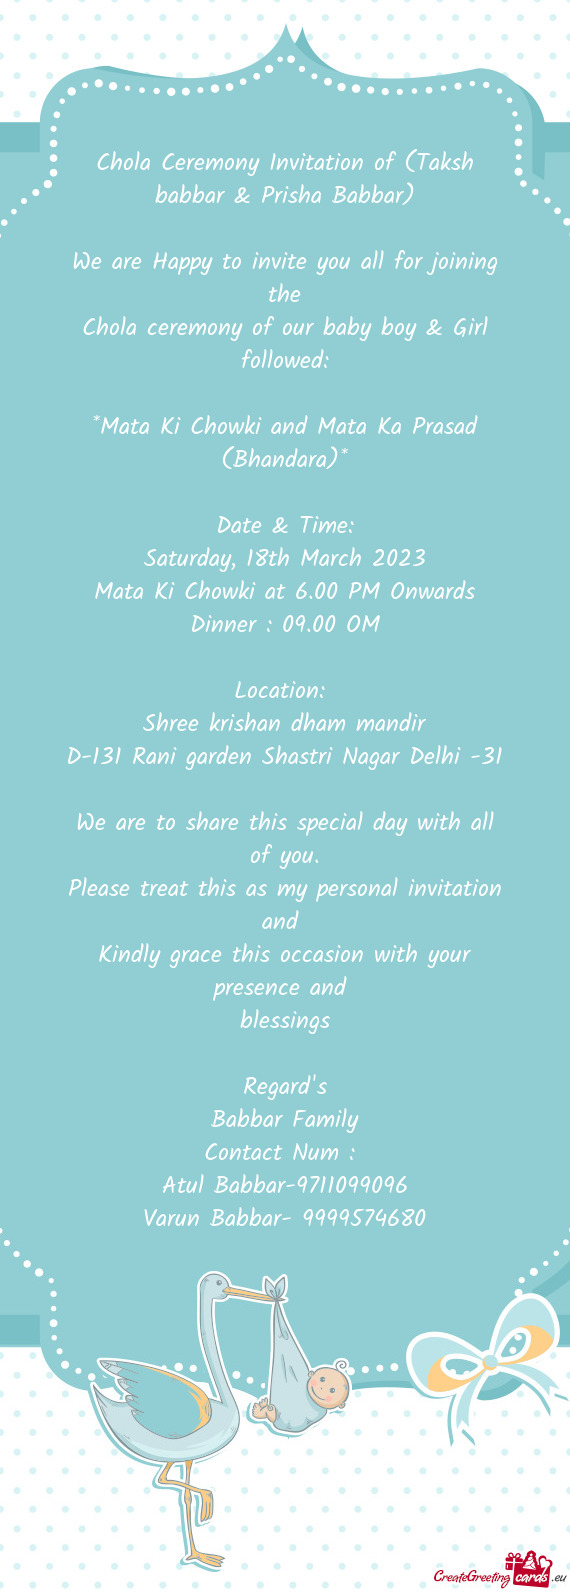 Chola Ceremony Invitation of (Taksh babbar & Prisha Babbar)